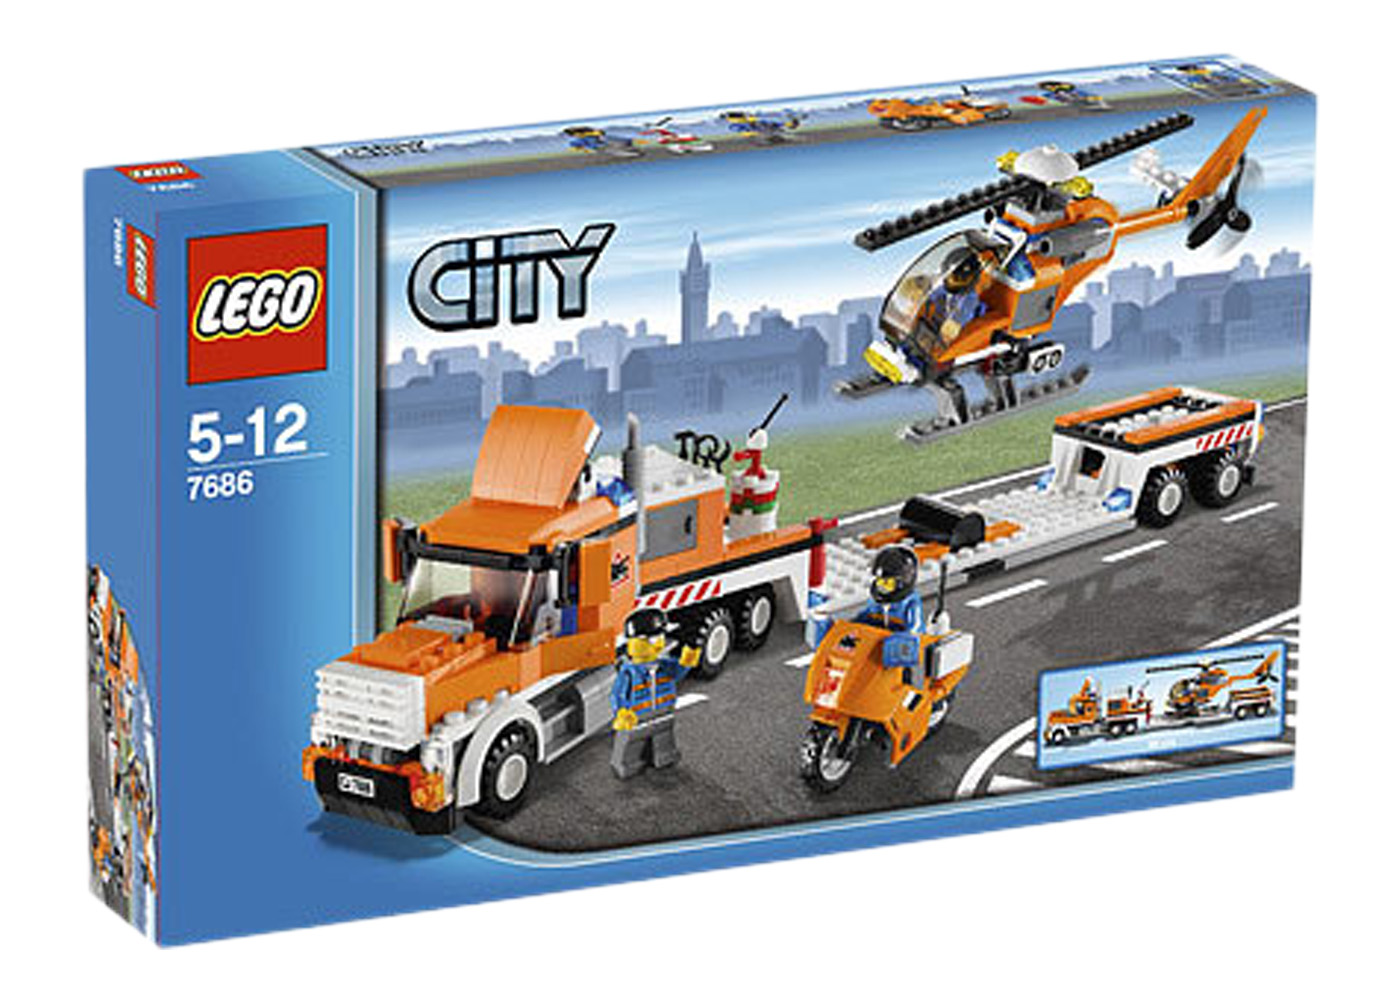 LEGO City Helicopter Transporter Set 7686 - US